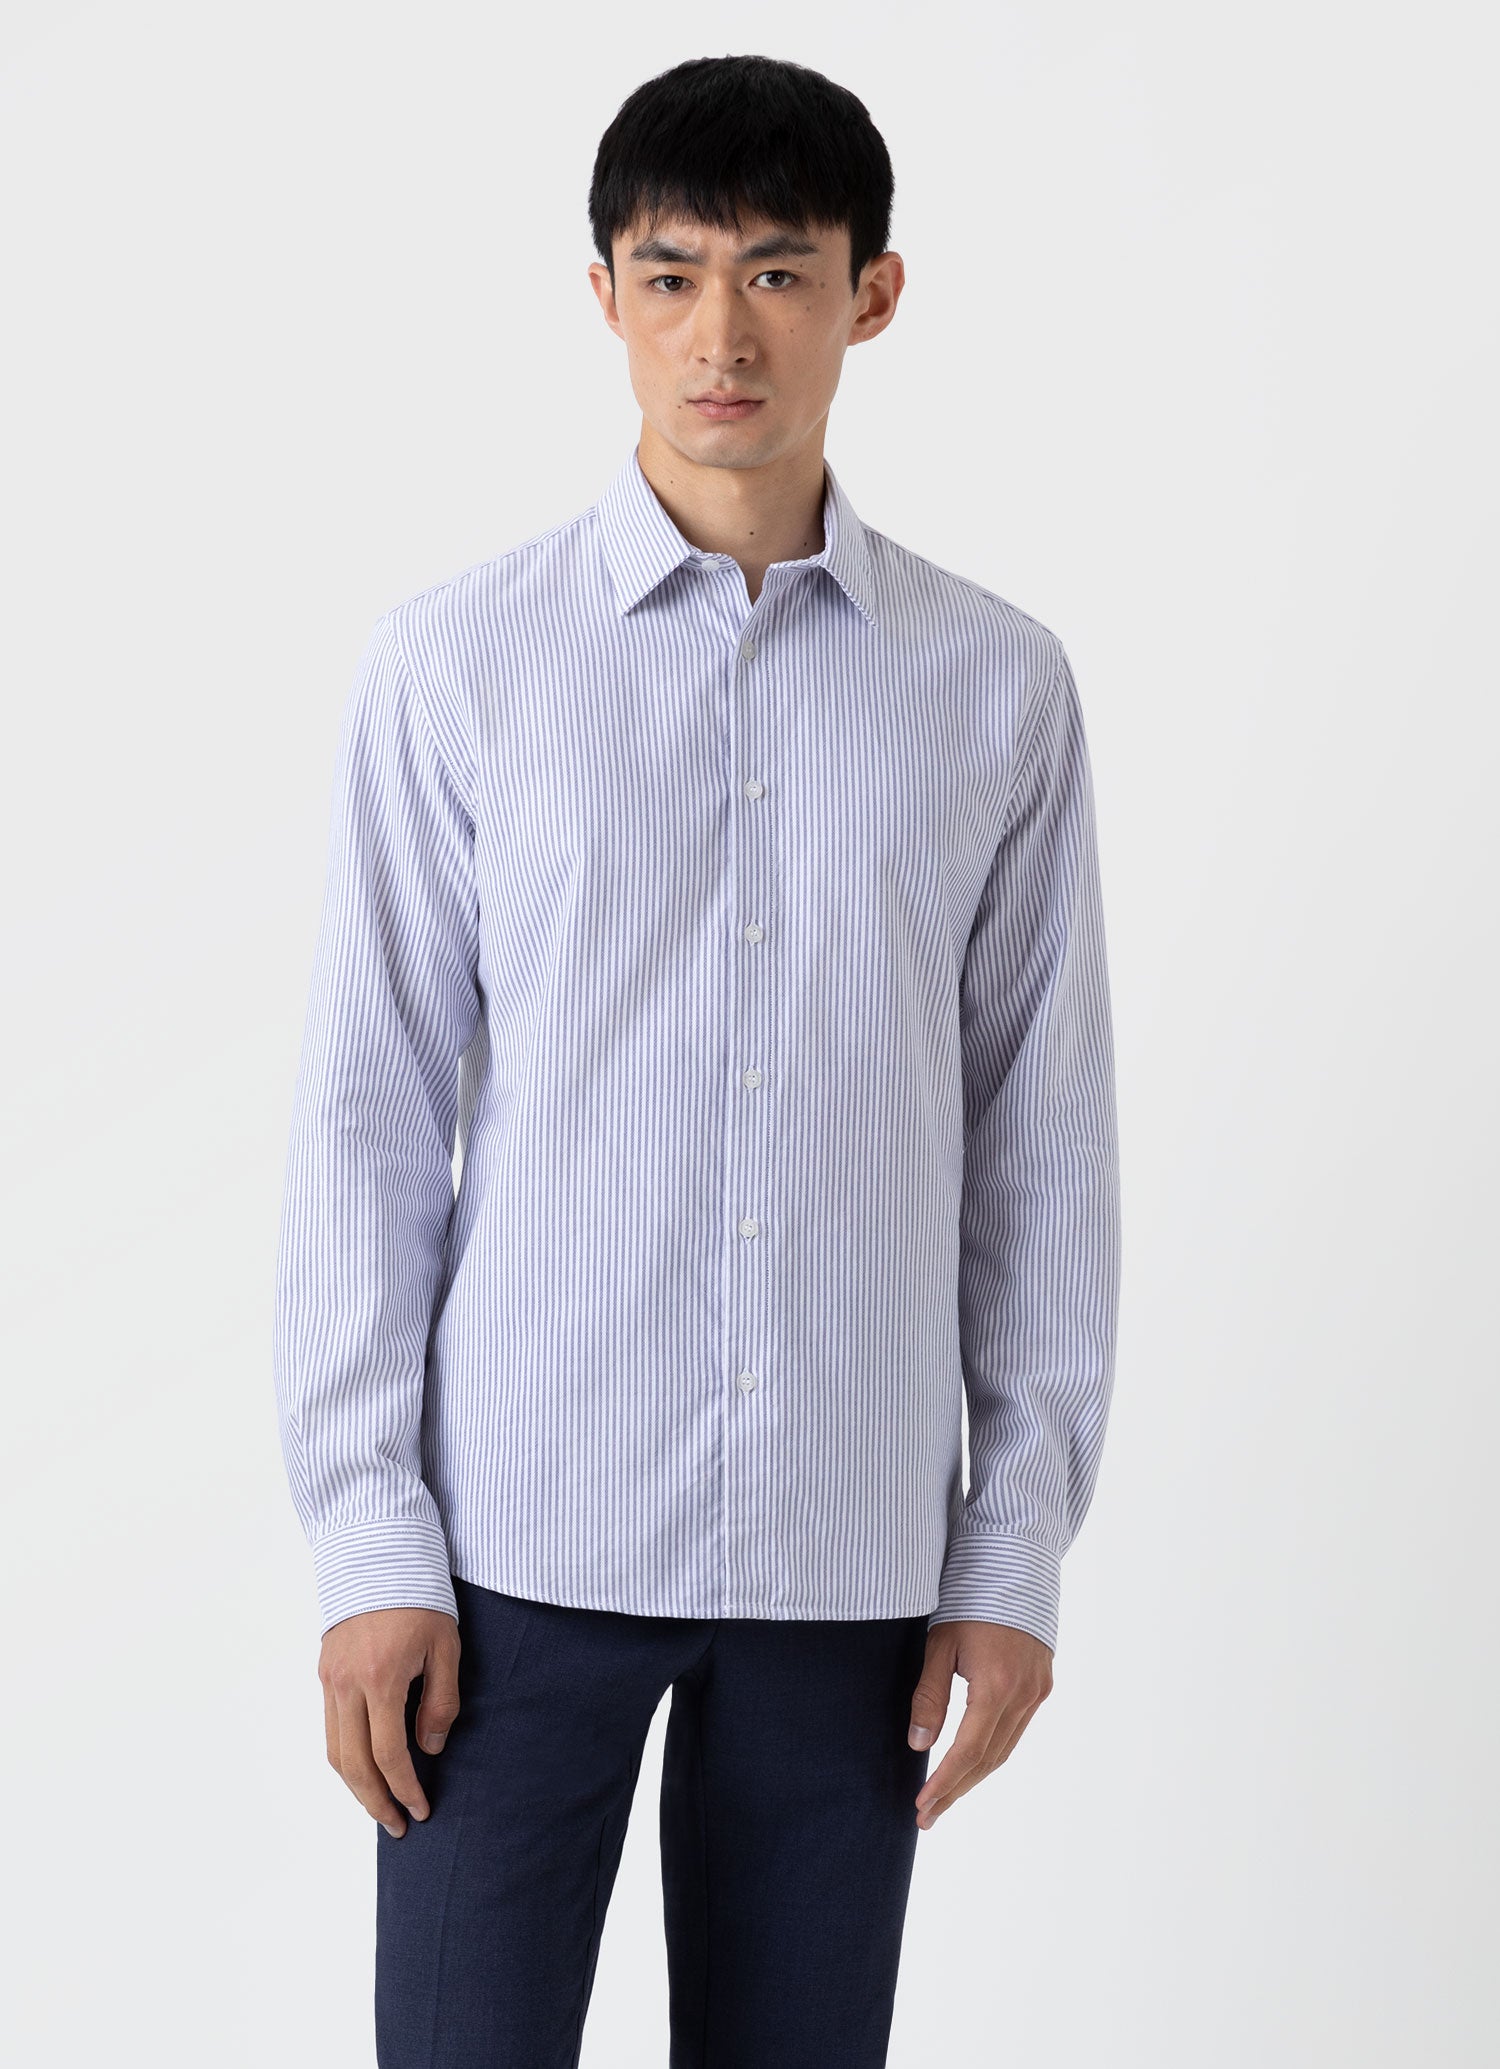 Men's Oxford Shirt in White/Navy Oxford Stripe | Sunspel